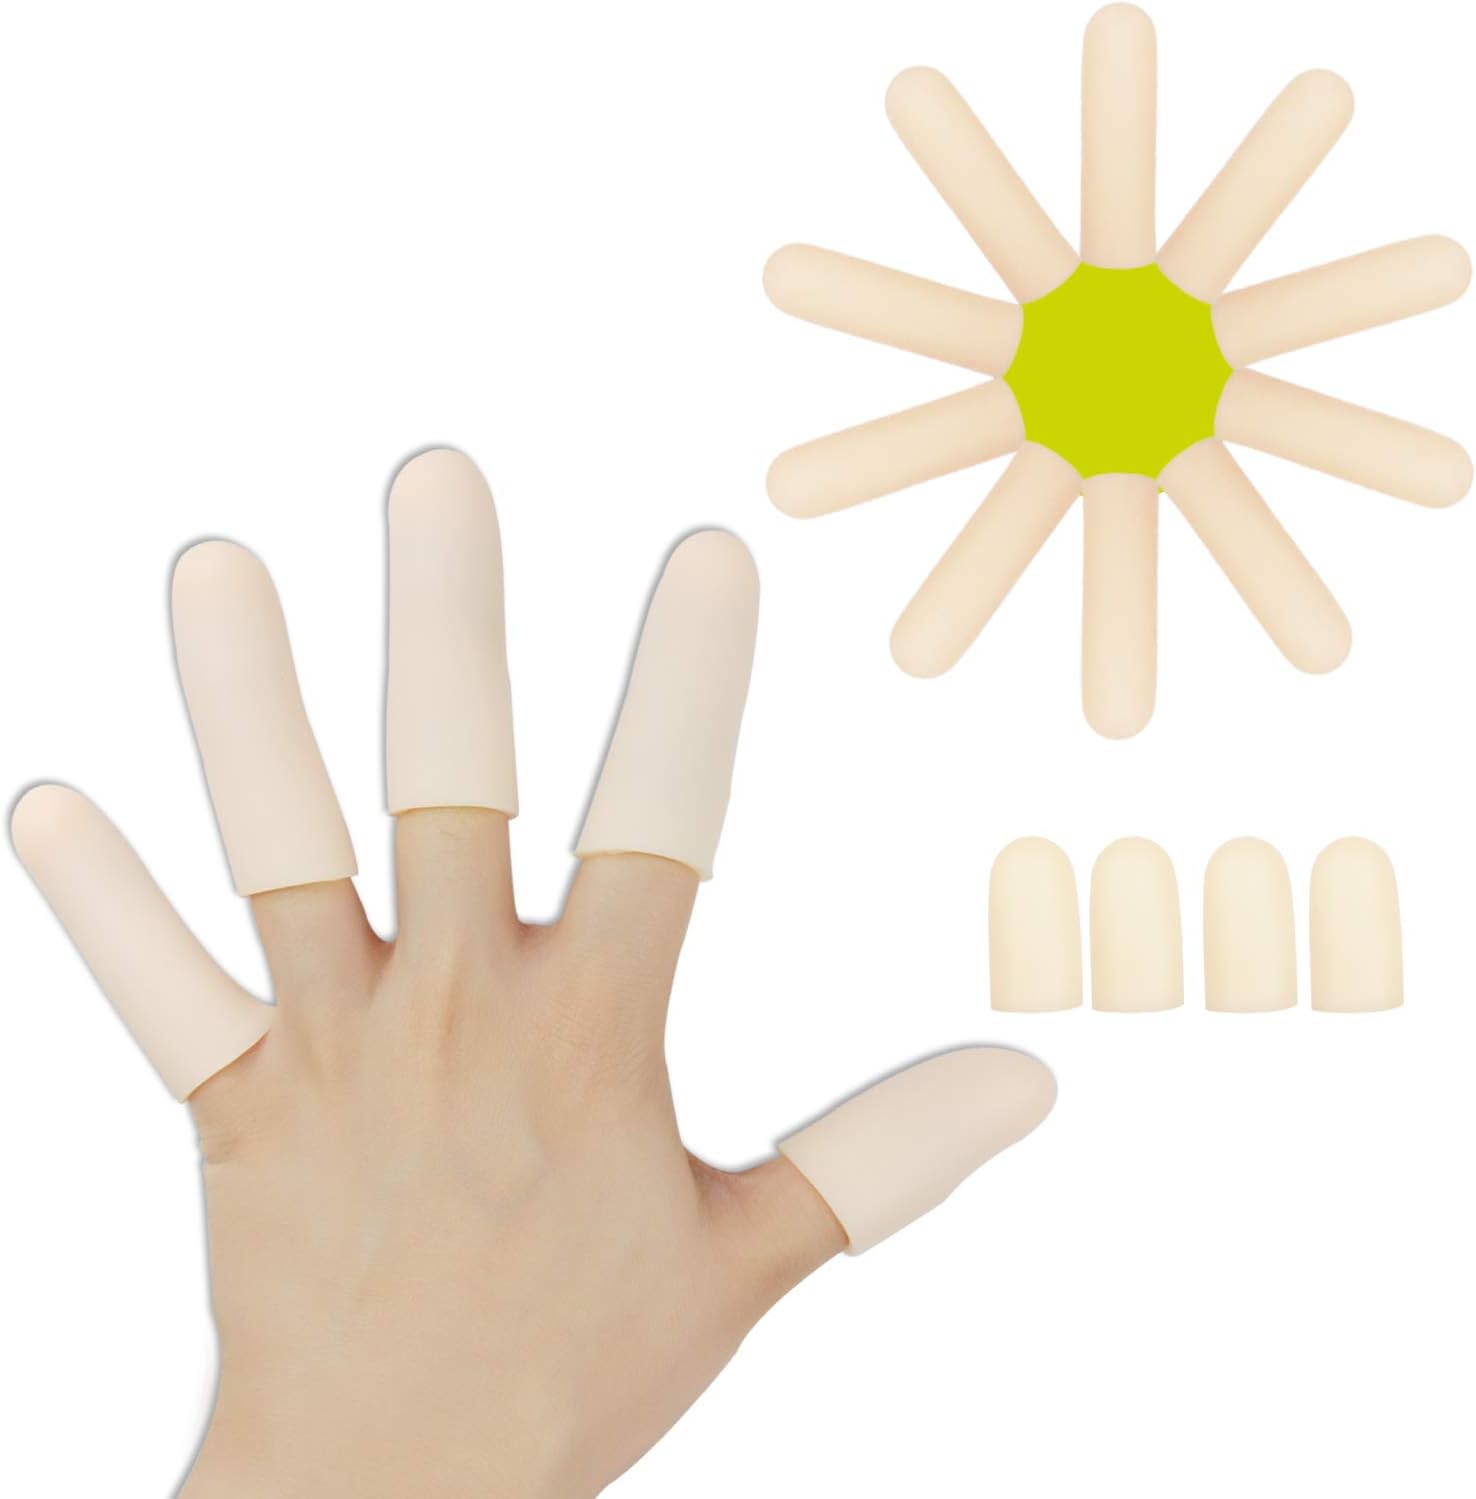 Generic Gel Finger Cots, Finger Protector Support(14 PCS) NEW MATERIAL Finger Sleeves Great for Trigger Finger, Hand Eczema, Finger Cra